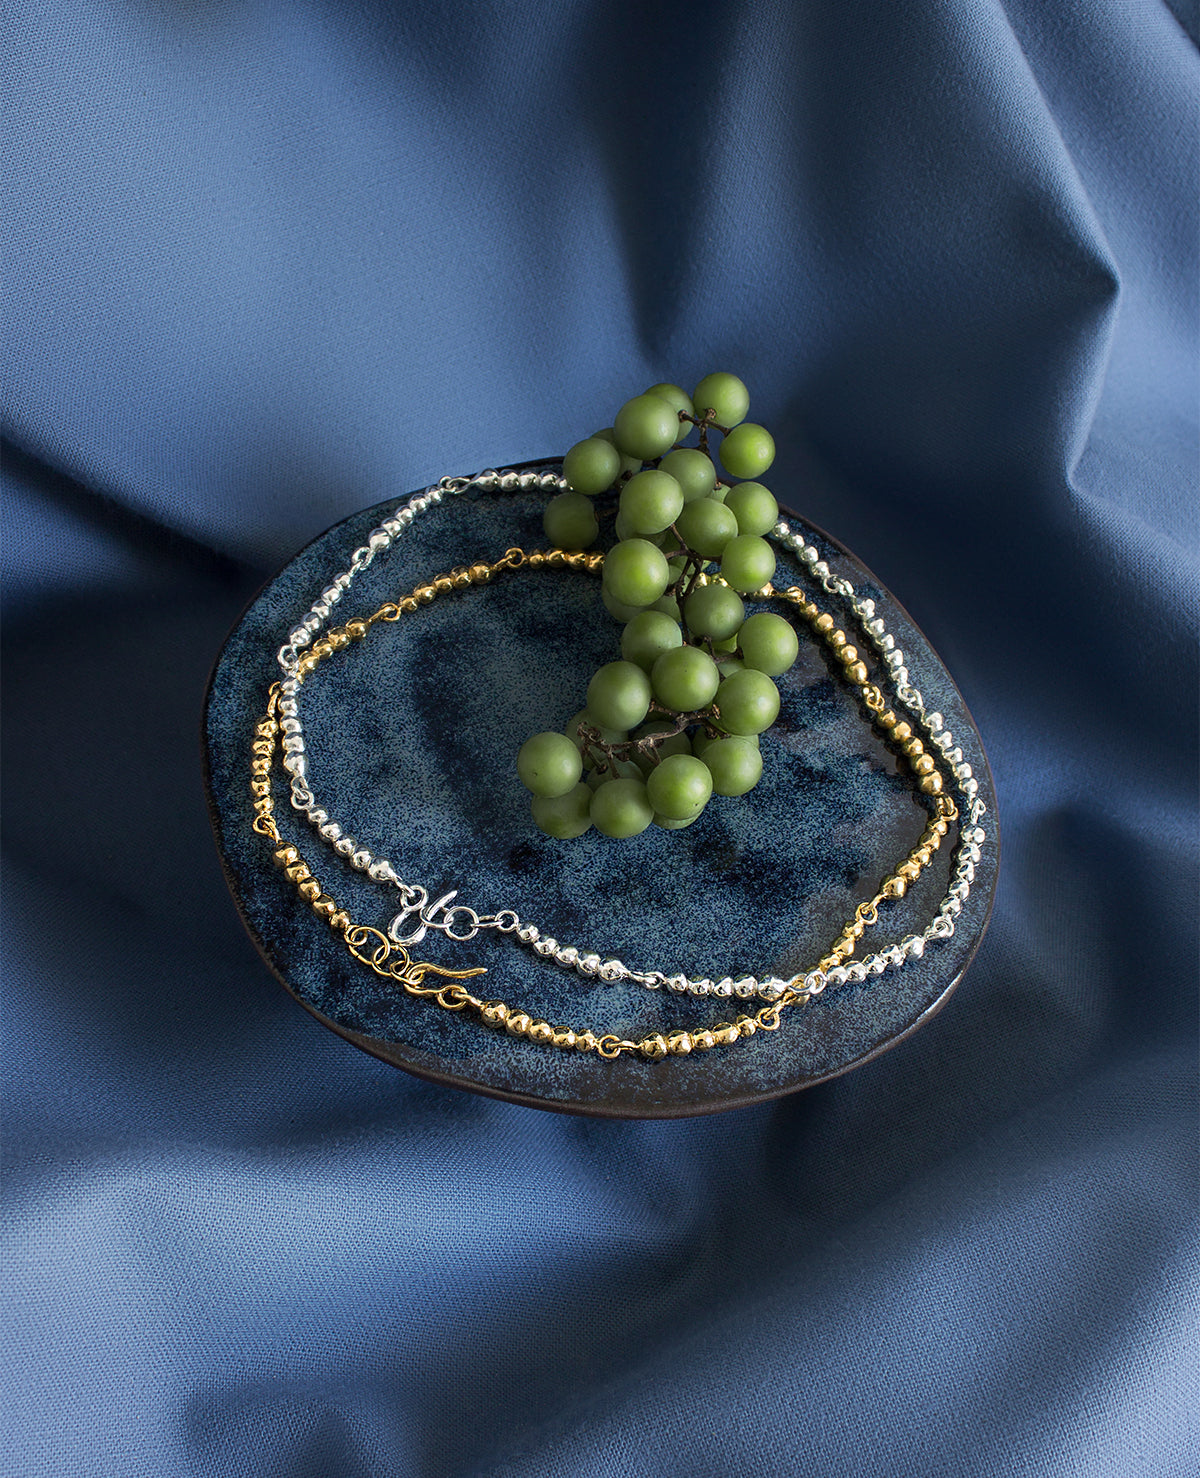 ELVIRE // silver - ORA-C jewelry - handmade jewelry by Montreal based independent designer Caroline Pham